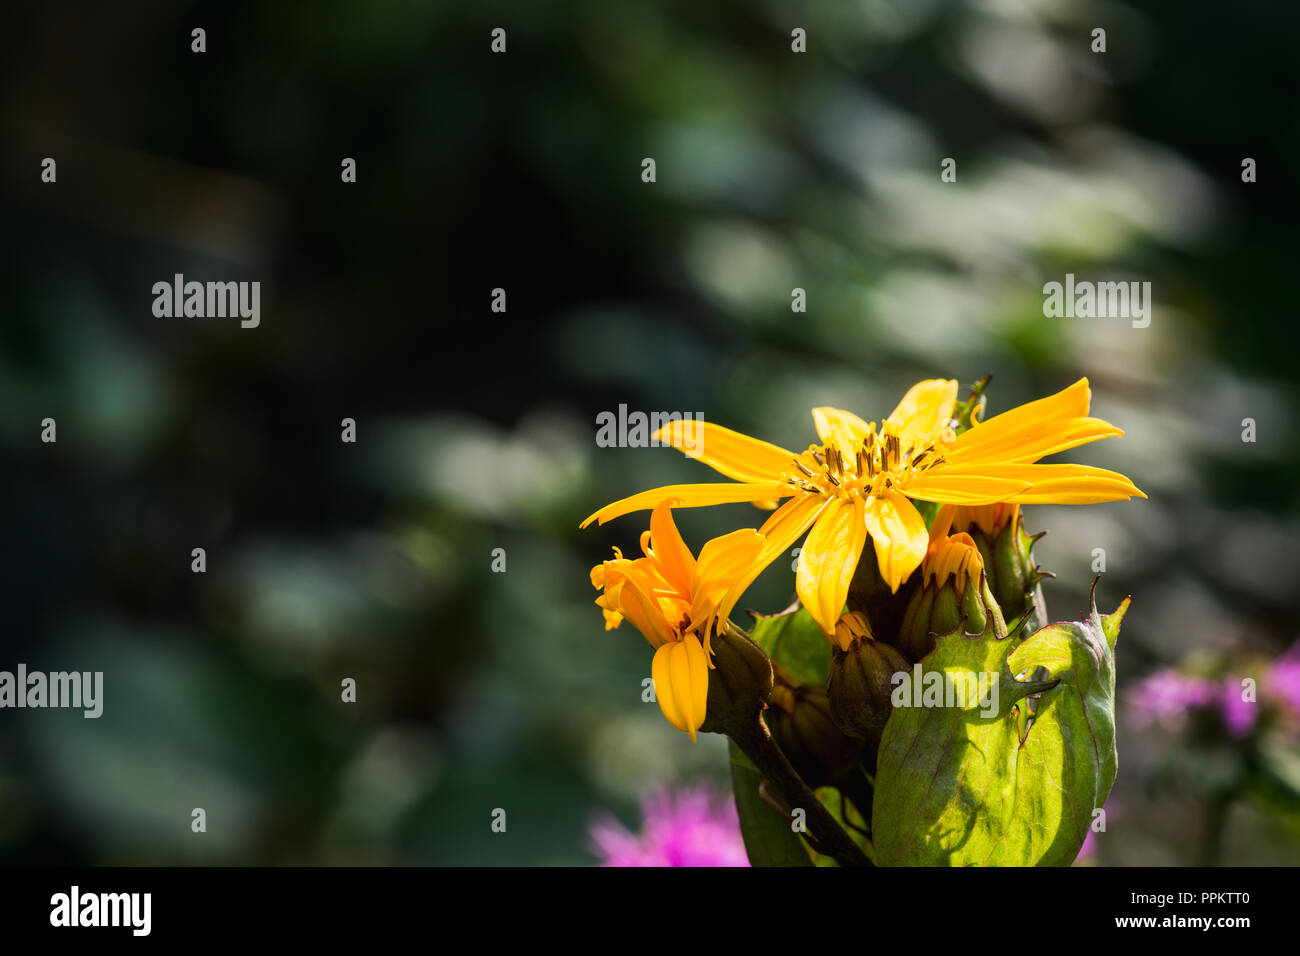 Flower Ligularia dentata orthello. Shallow depth of field. Selective focus. Stock Photo